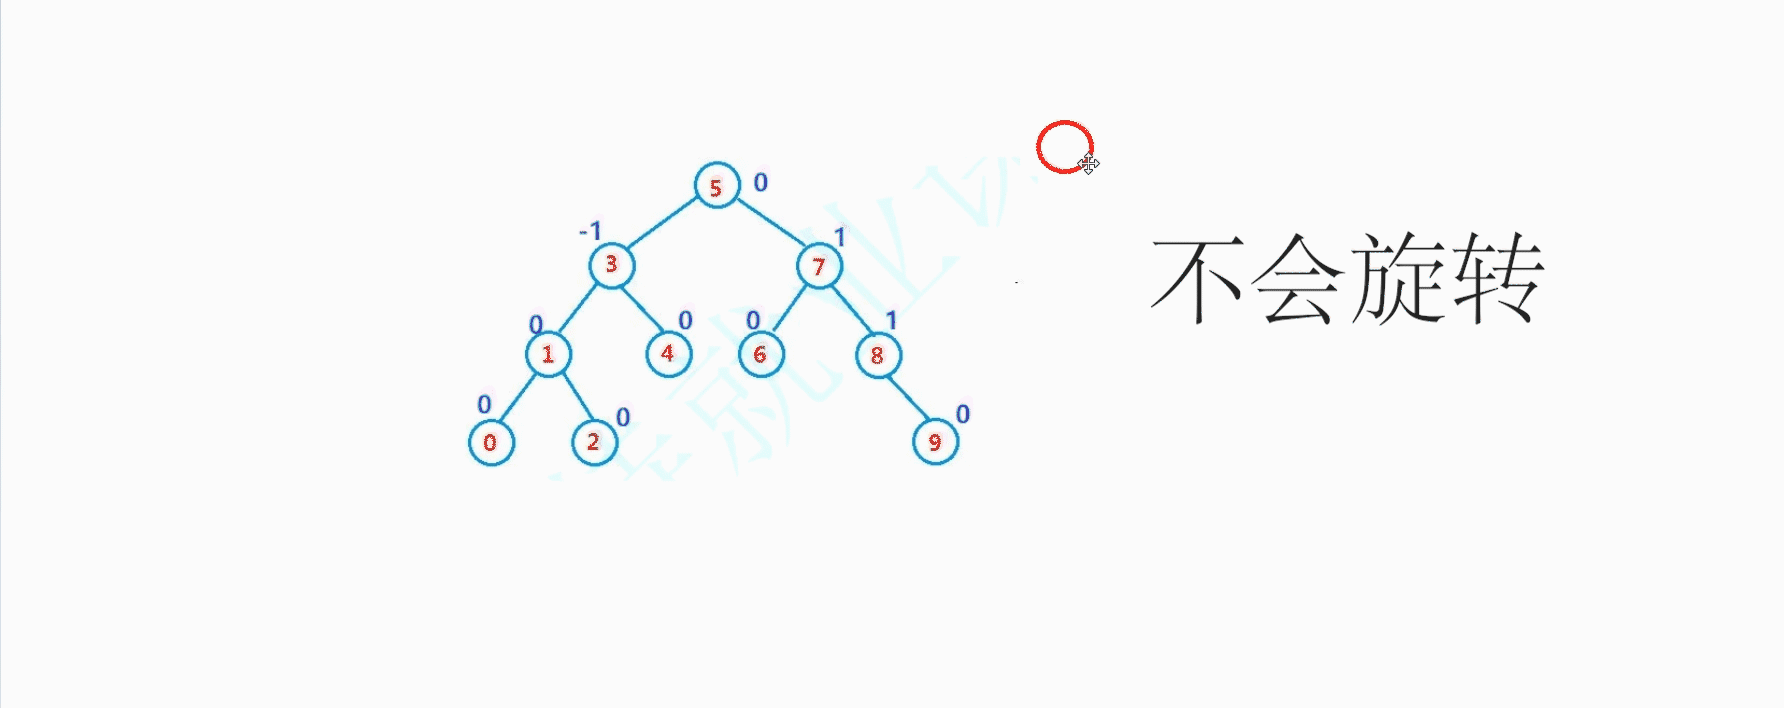 AVL树和红黑树的模拟实现_父节点_02